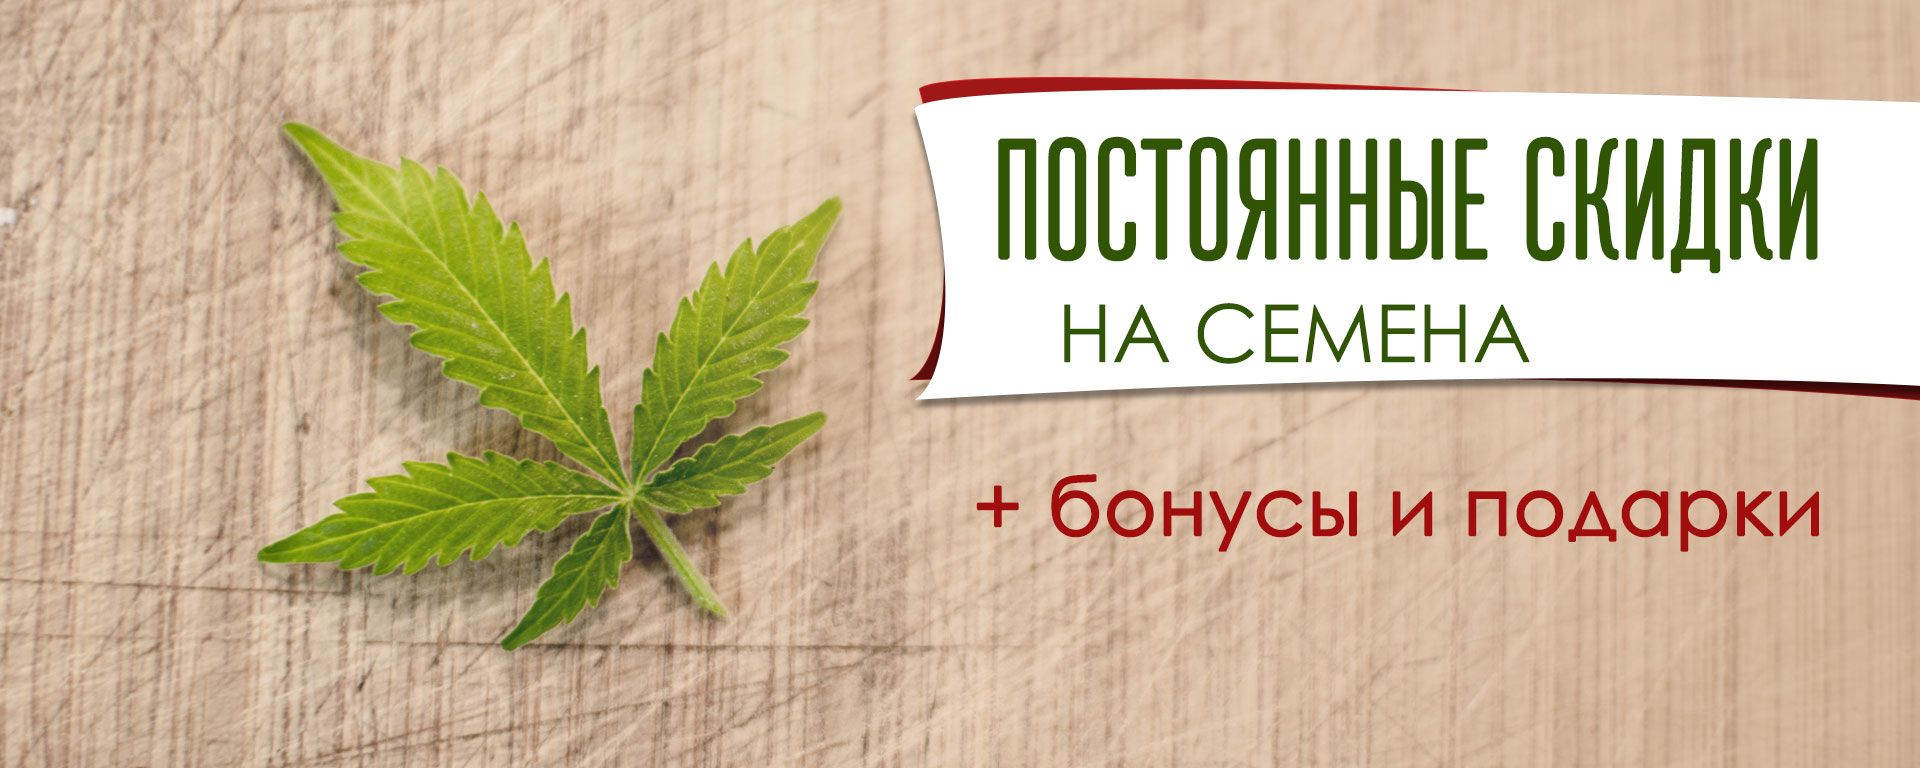 Банки семян конопли украина тор браузер фбр hyrda